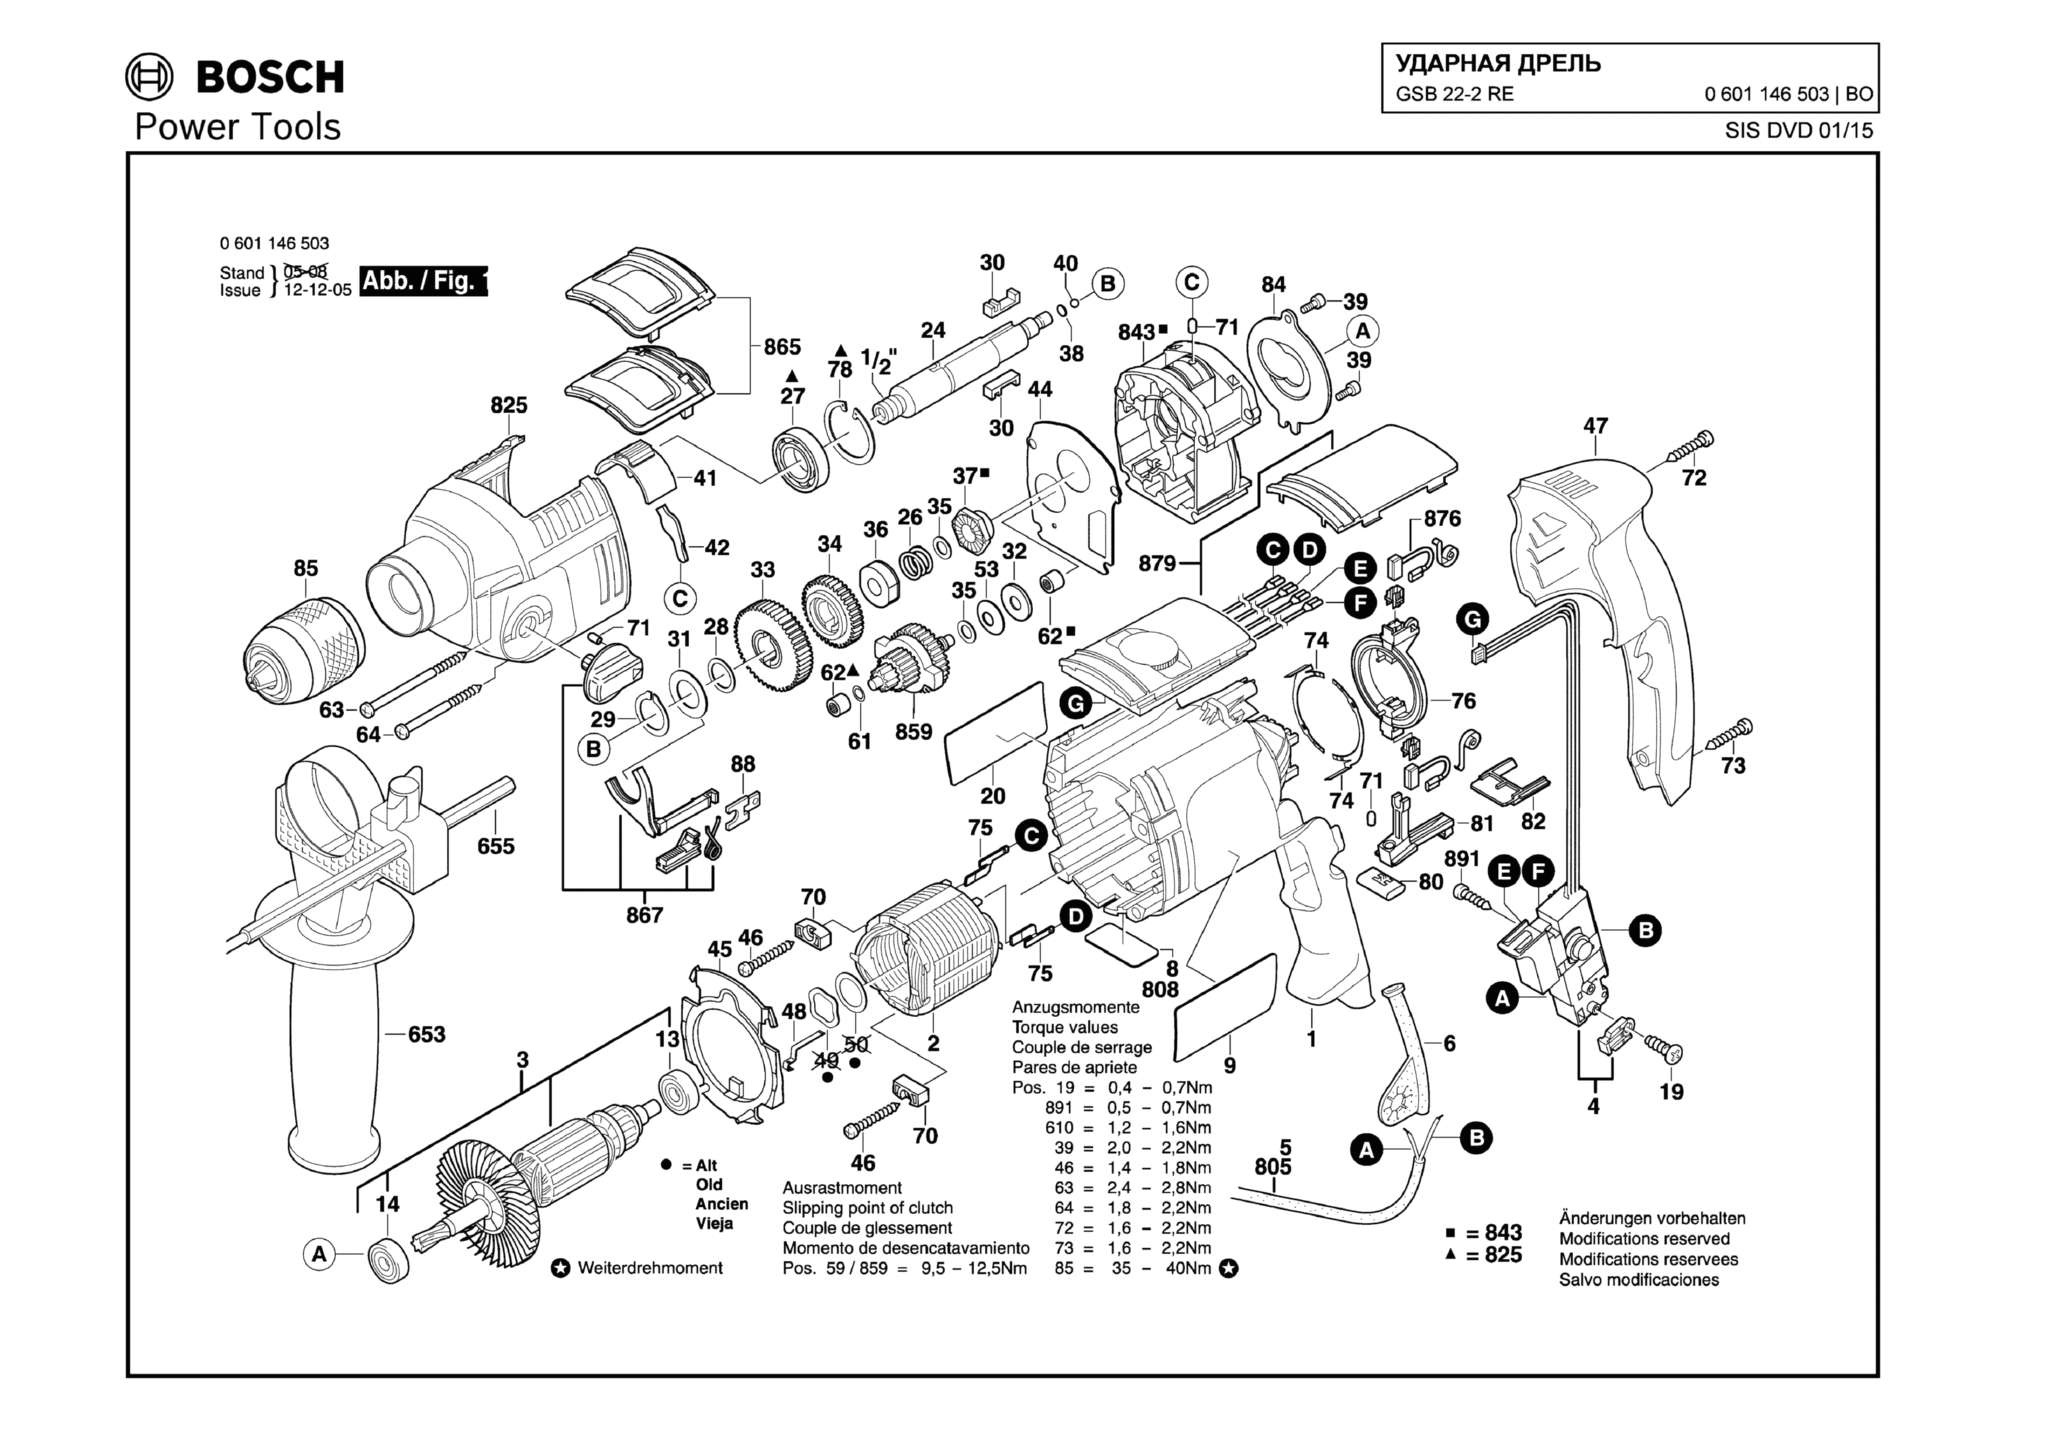 Запчасти, схема и деталировка Bosch GSB 22-2 RE (ТИП 0601146503)